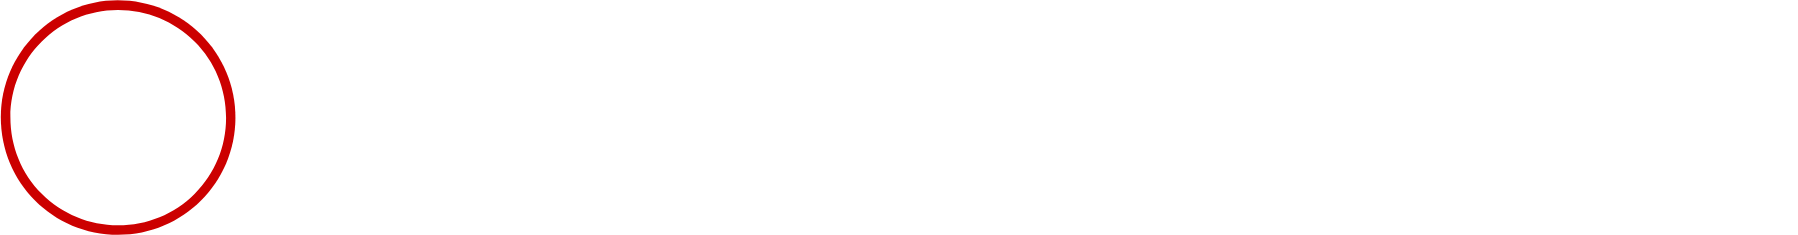 Texas Capital Bancshares logo large for dark backgrounds (transparent PNG)